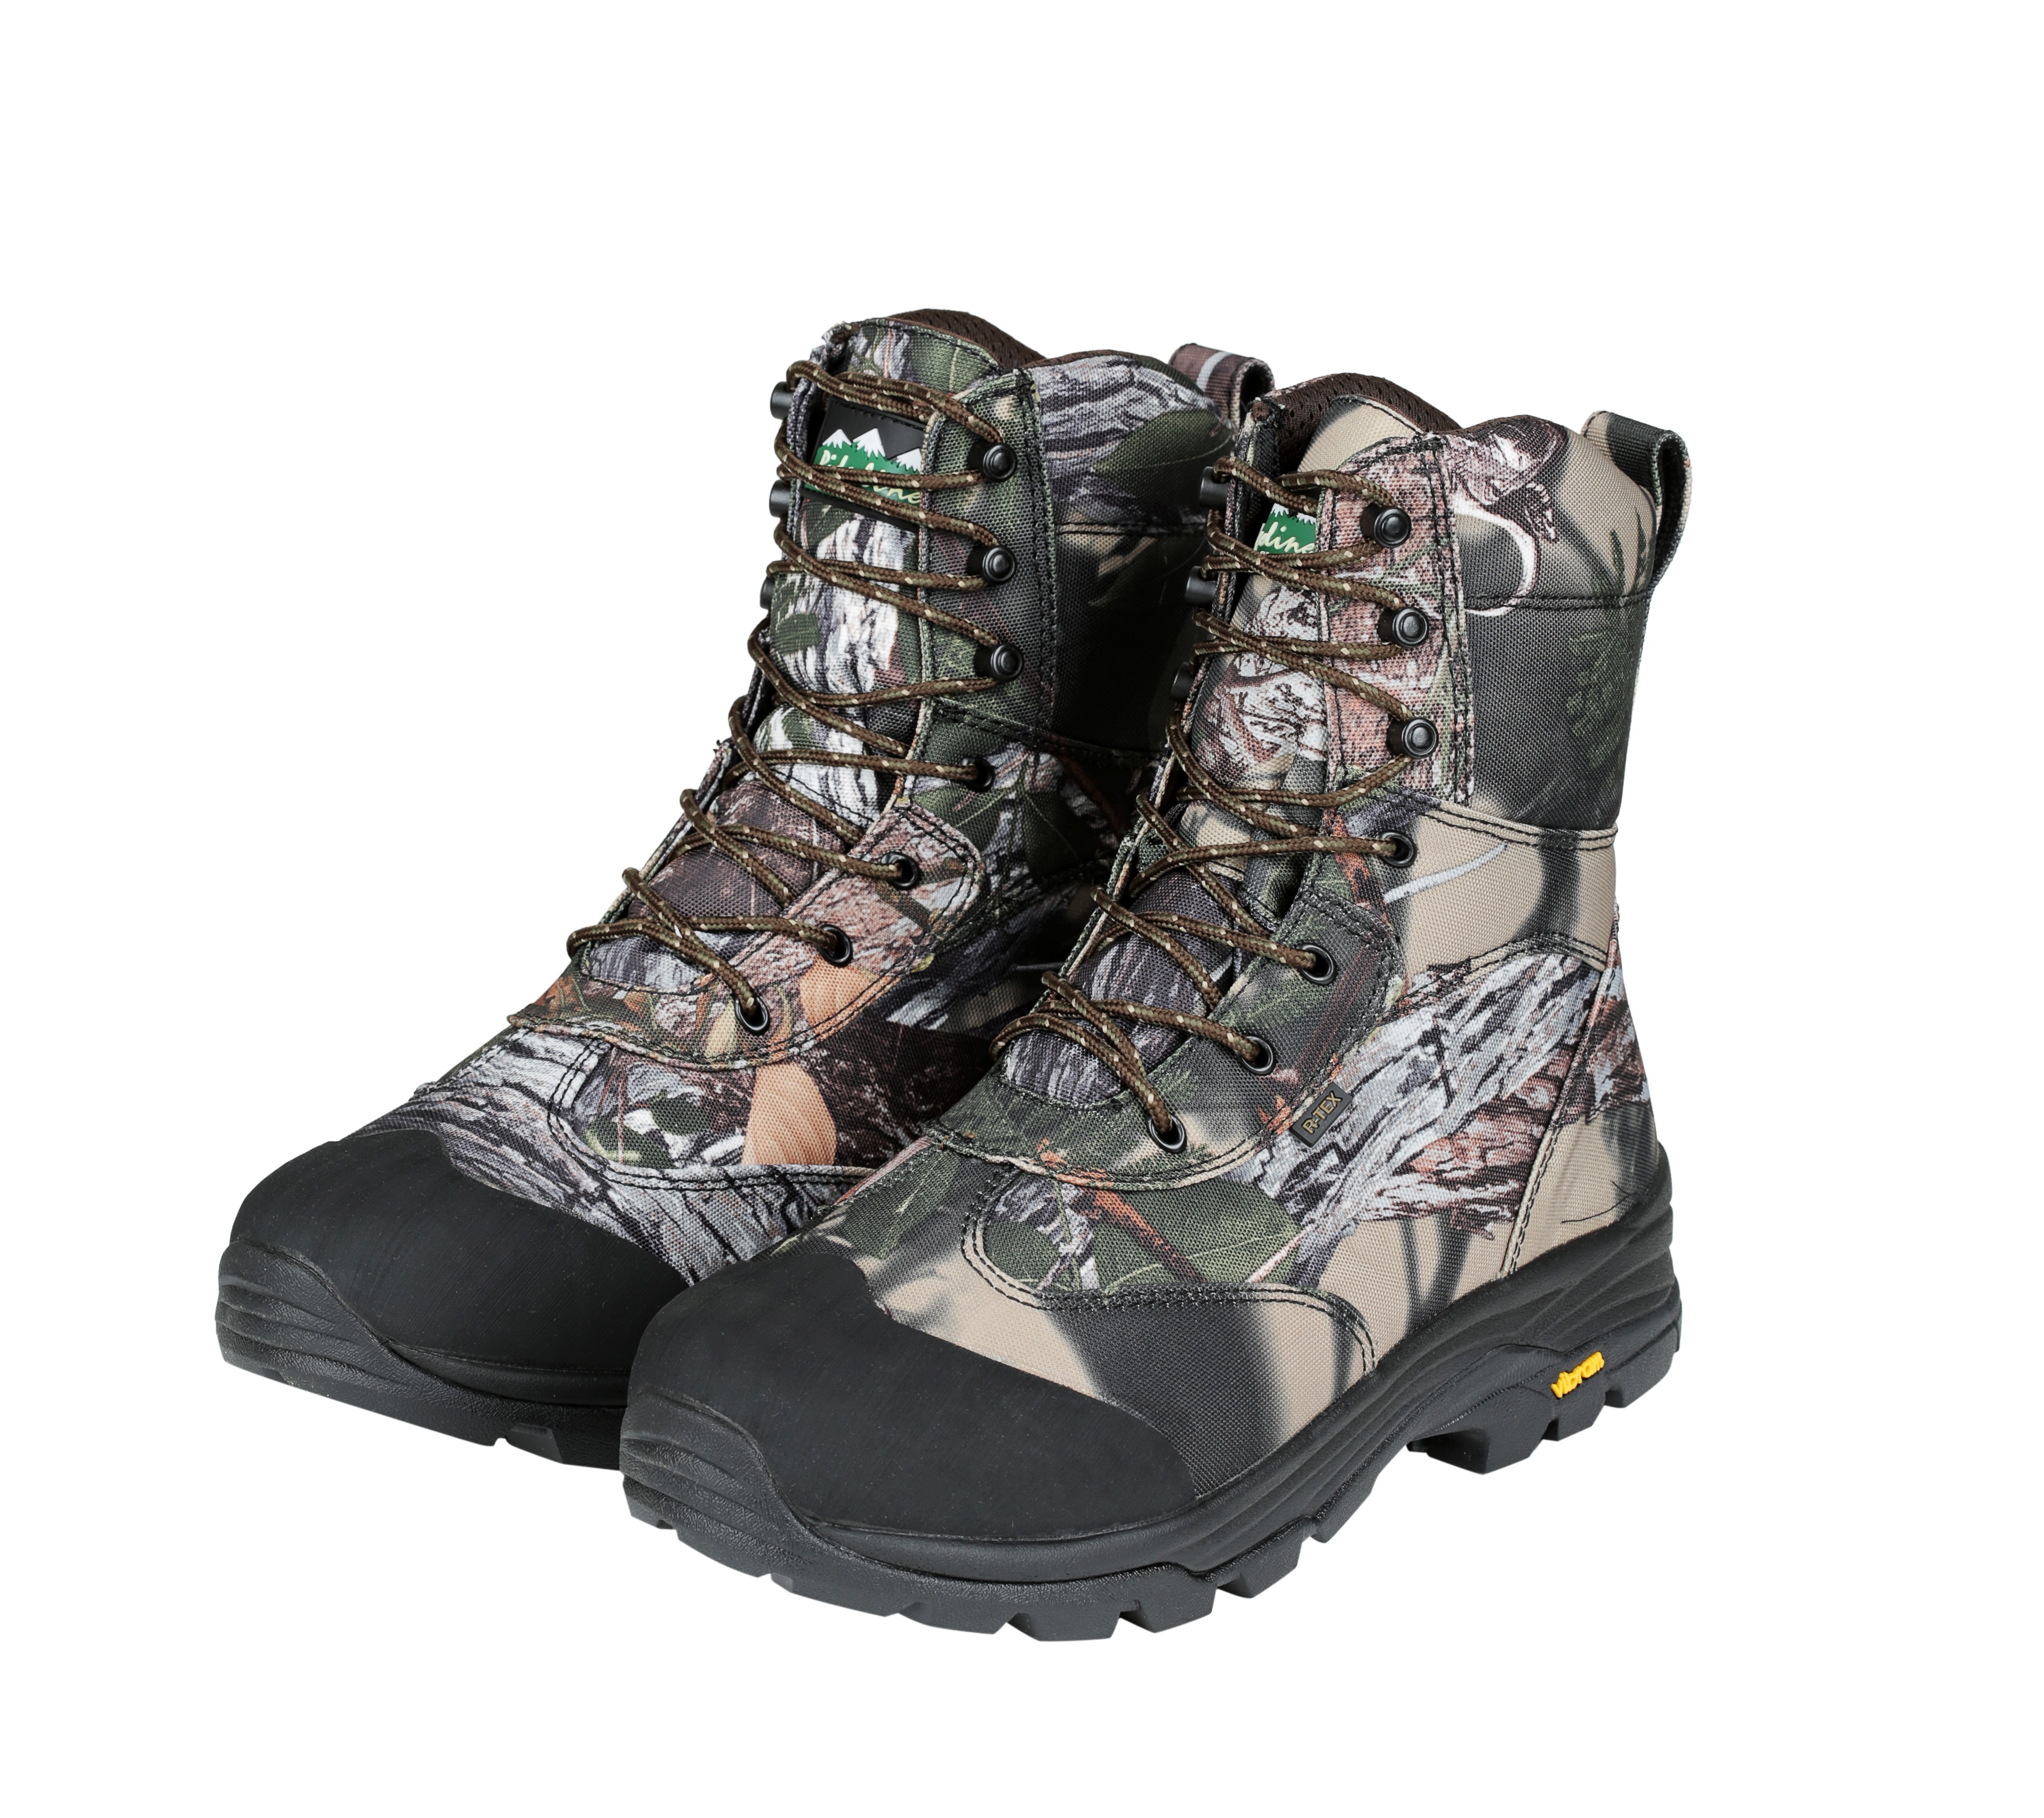 ridgeline hunting boots